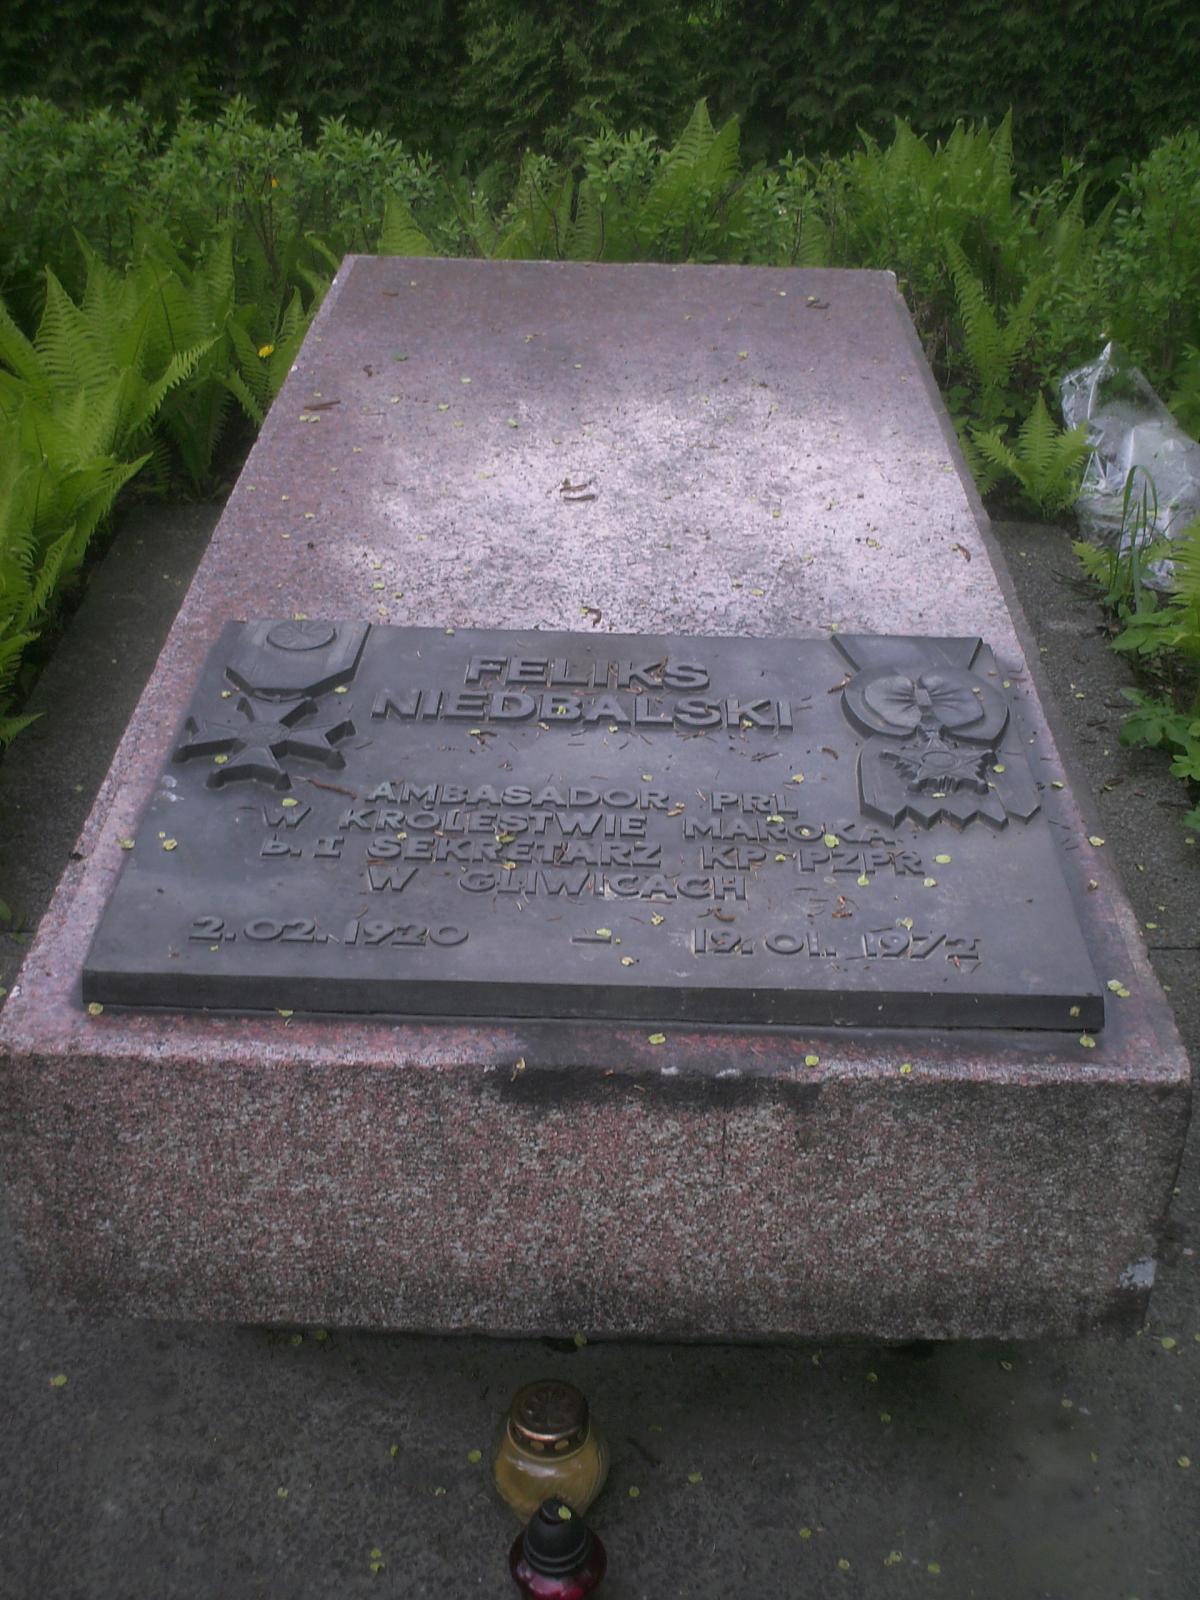 Wikipedia, Central Cemetery (Gliwice), Polscy ambasadorzy, Self-published work, Taken with BenQ DC C